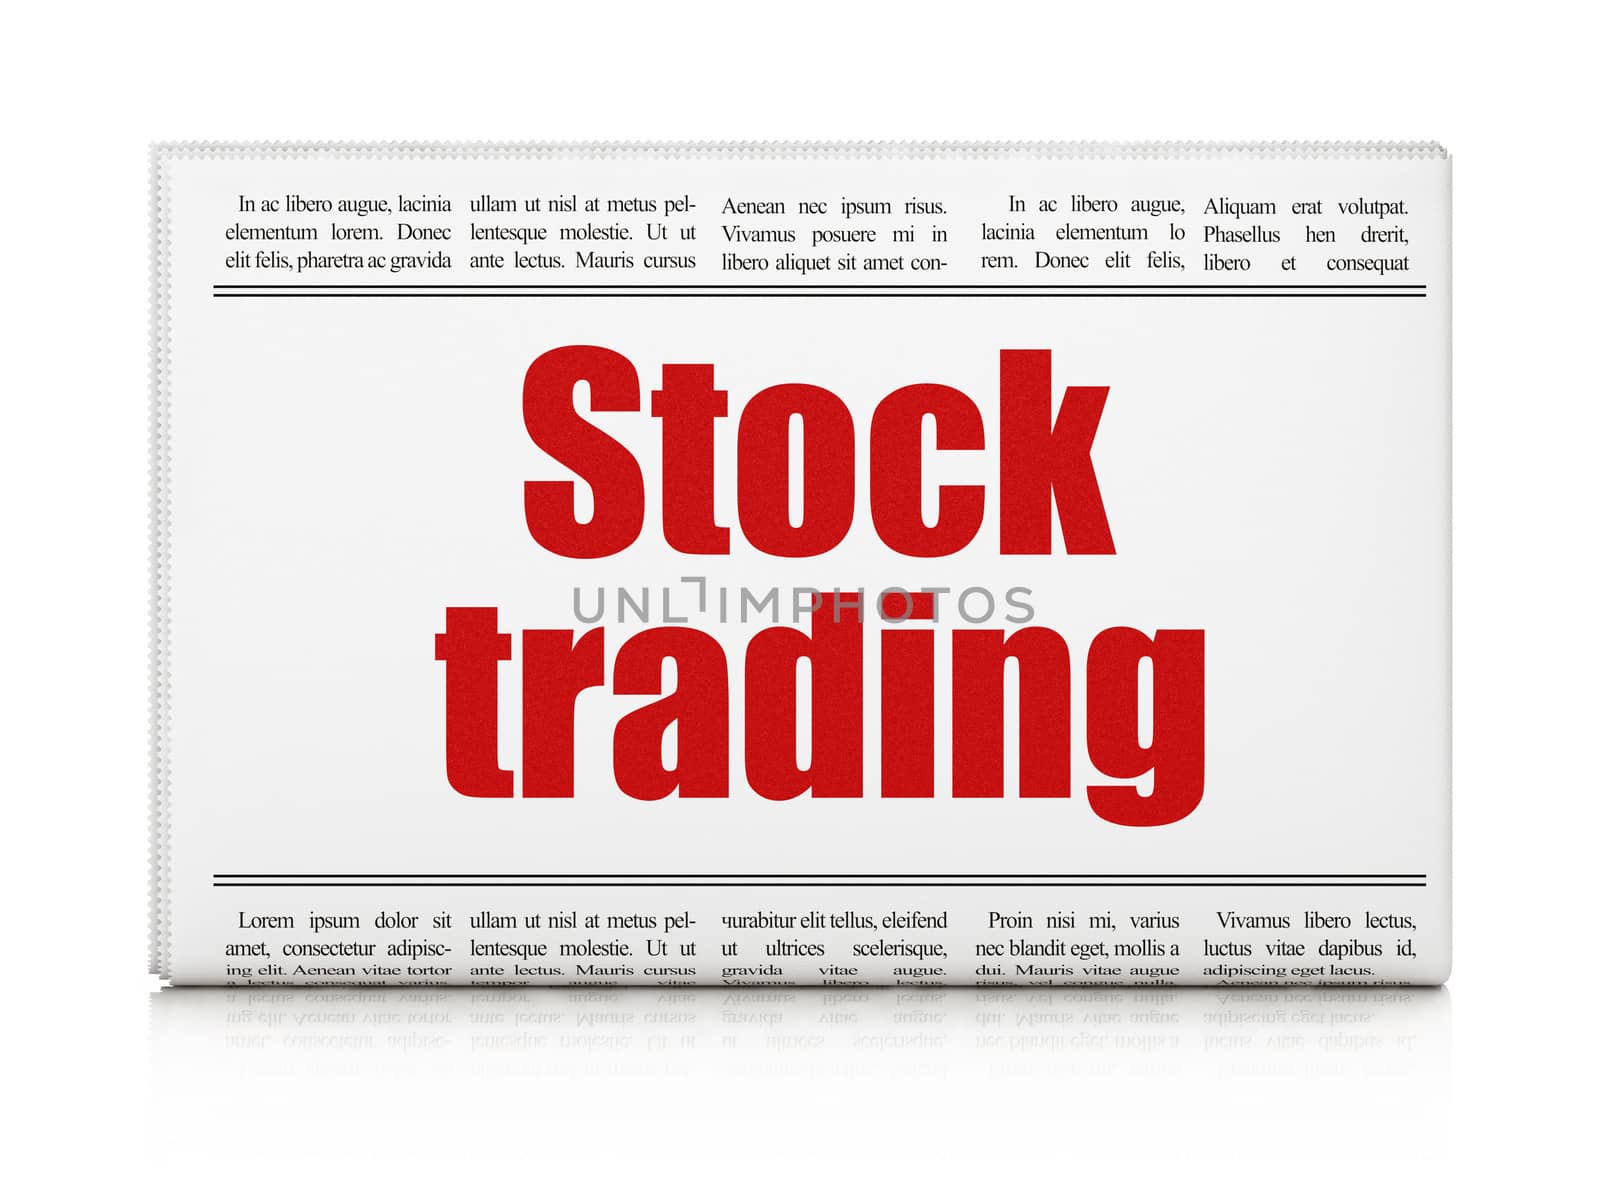 Business concept: newspaper headline Stock Trading by maxkabakov